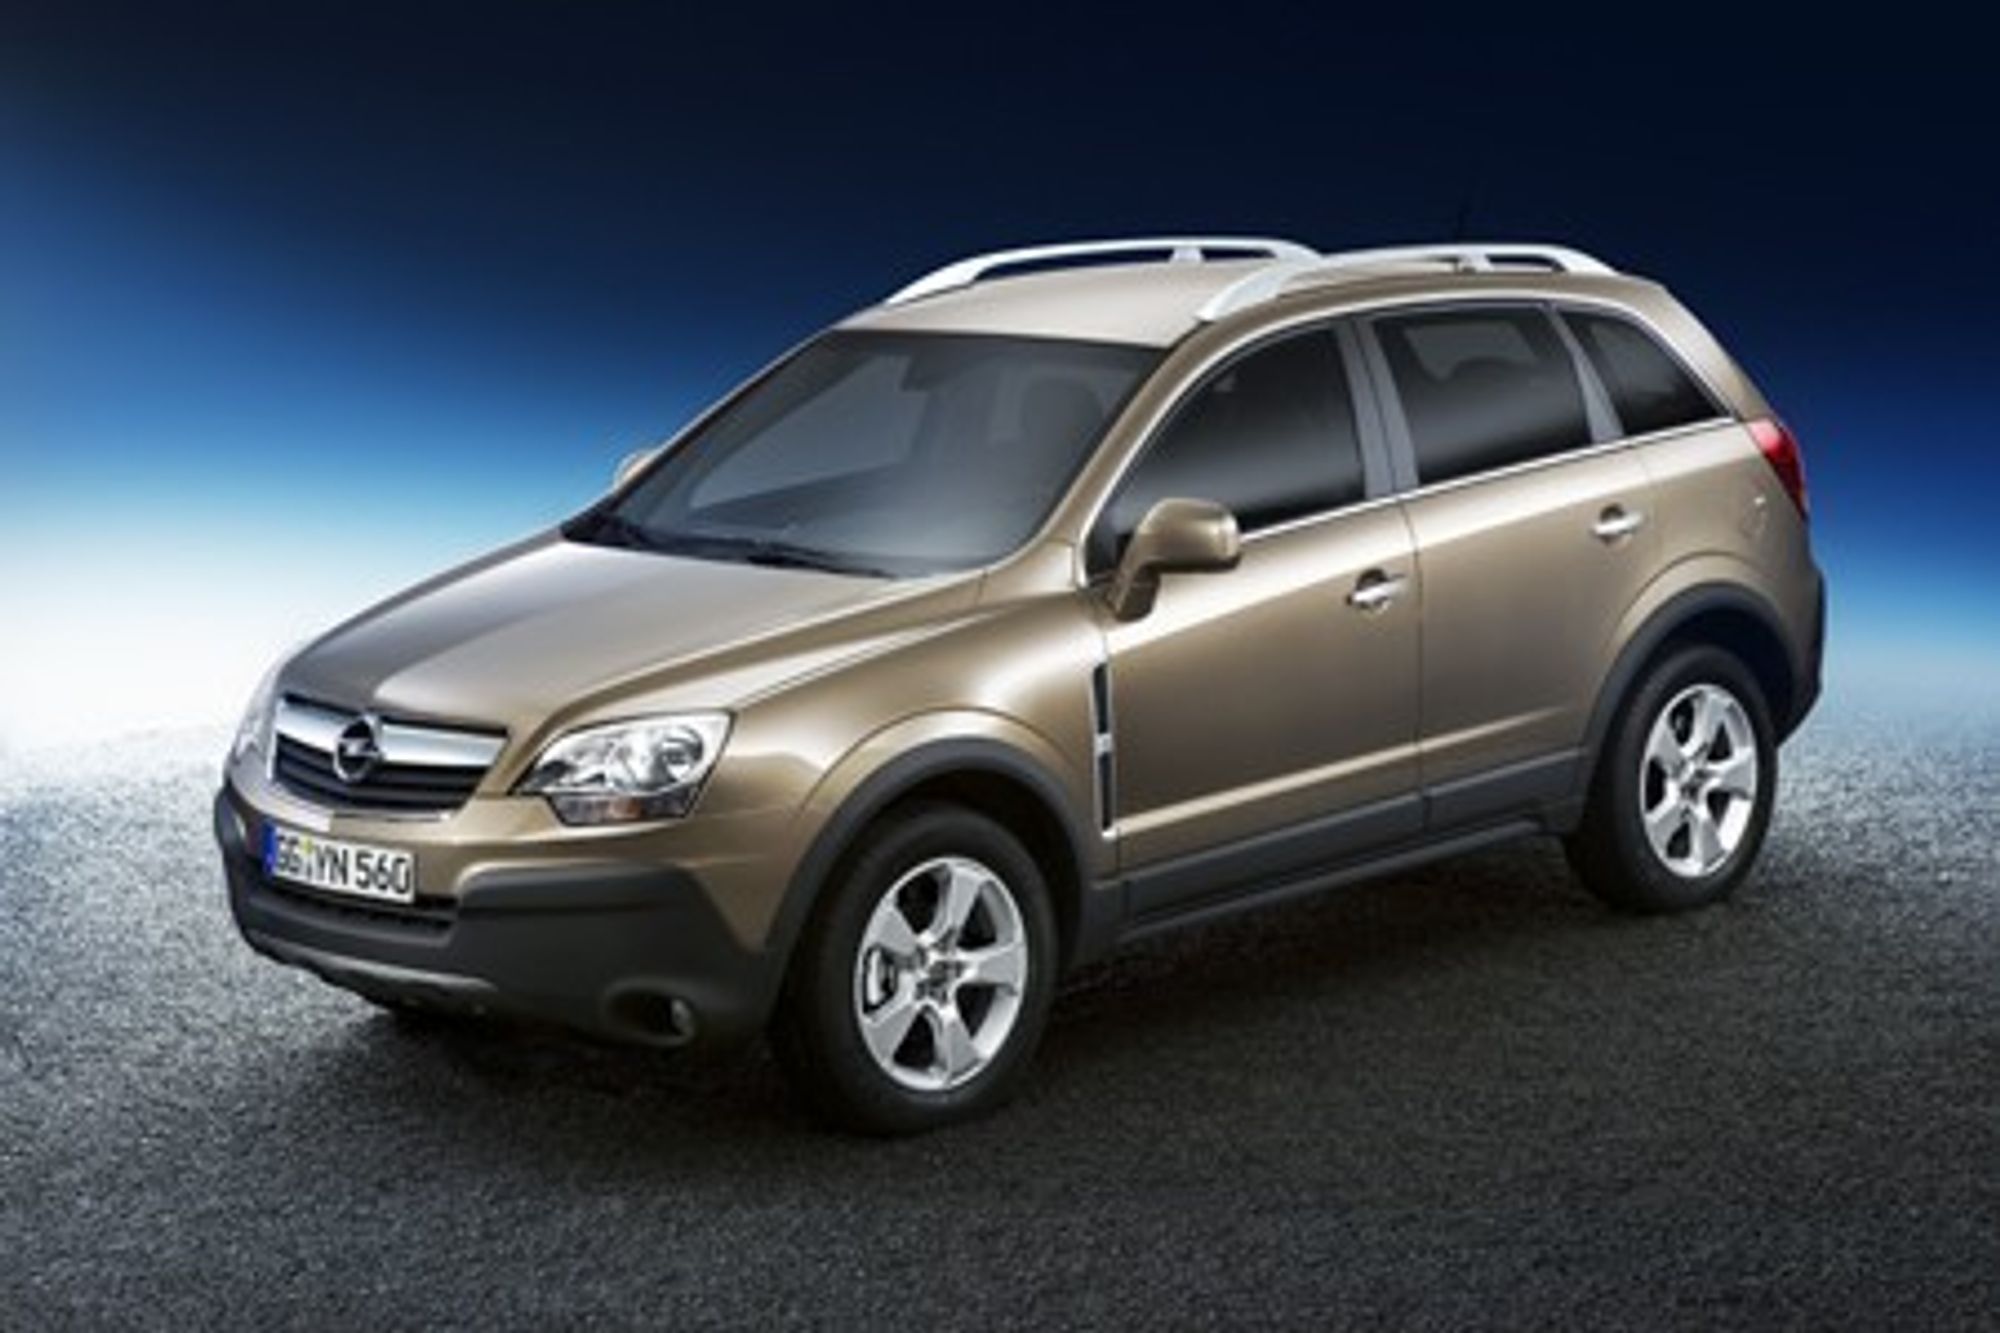 SUV: Opel Antara GTC blir nopk mest solgt som dieselbil i Norge. Da leveres den med en 2-liters diesel på 110 kW/150 hk.